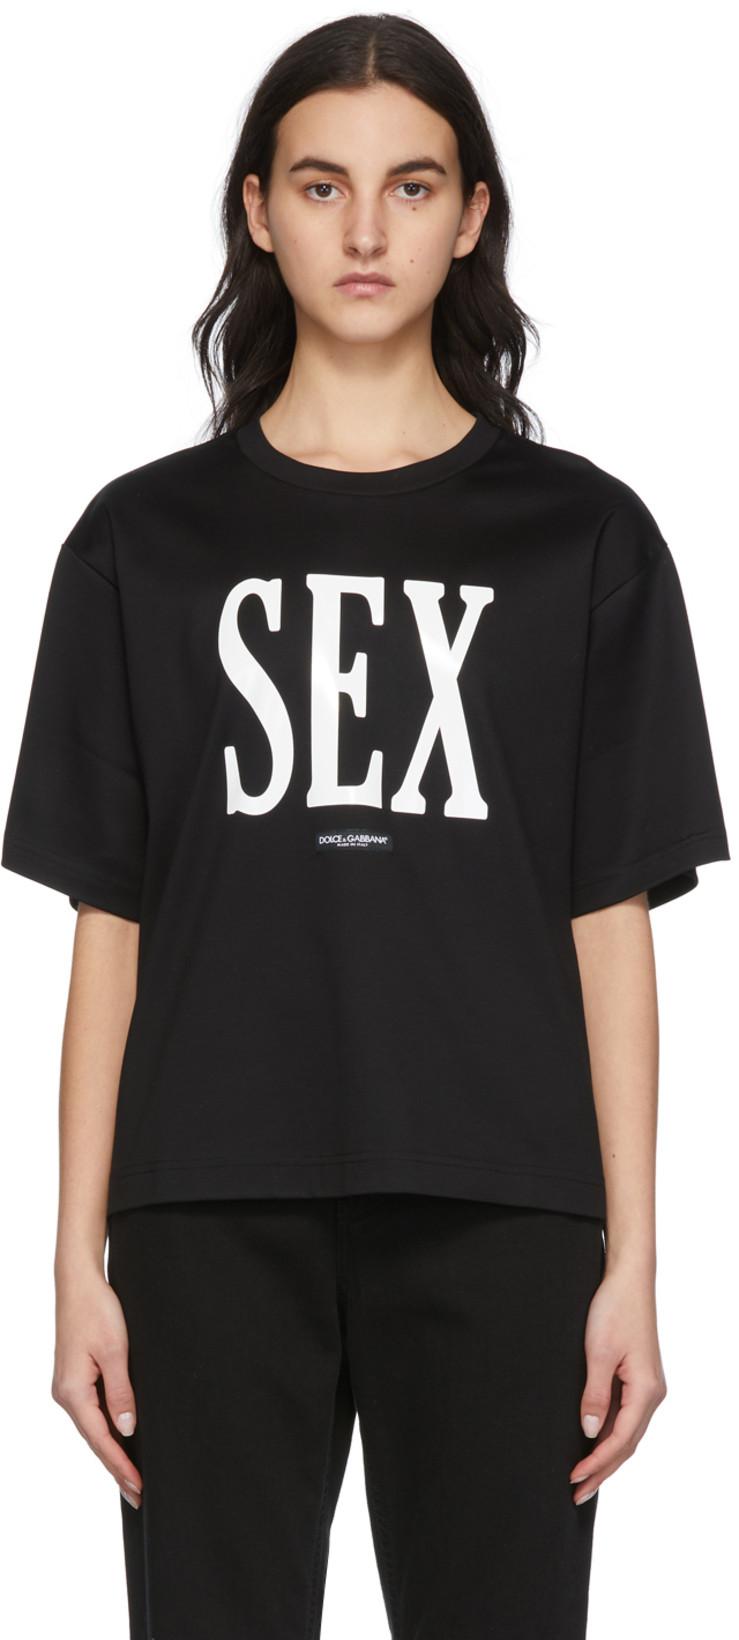 Black Oversized 'Sex' T-Shirt by DOLCE&GABBANA